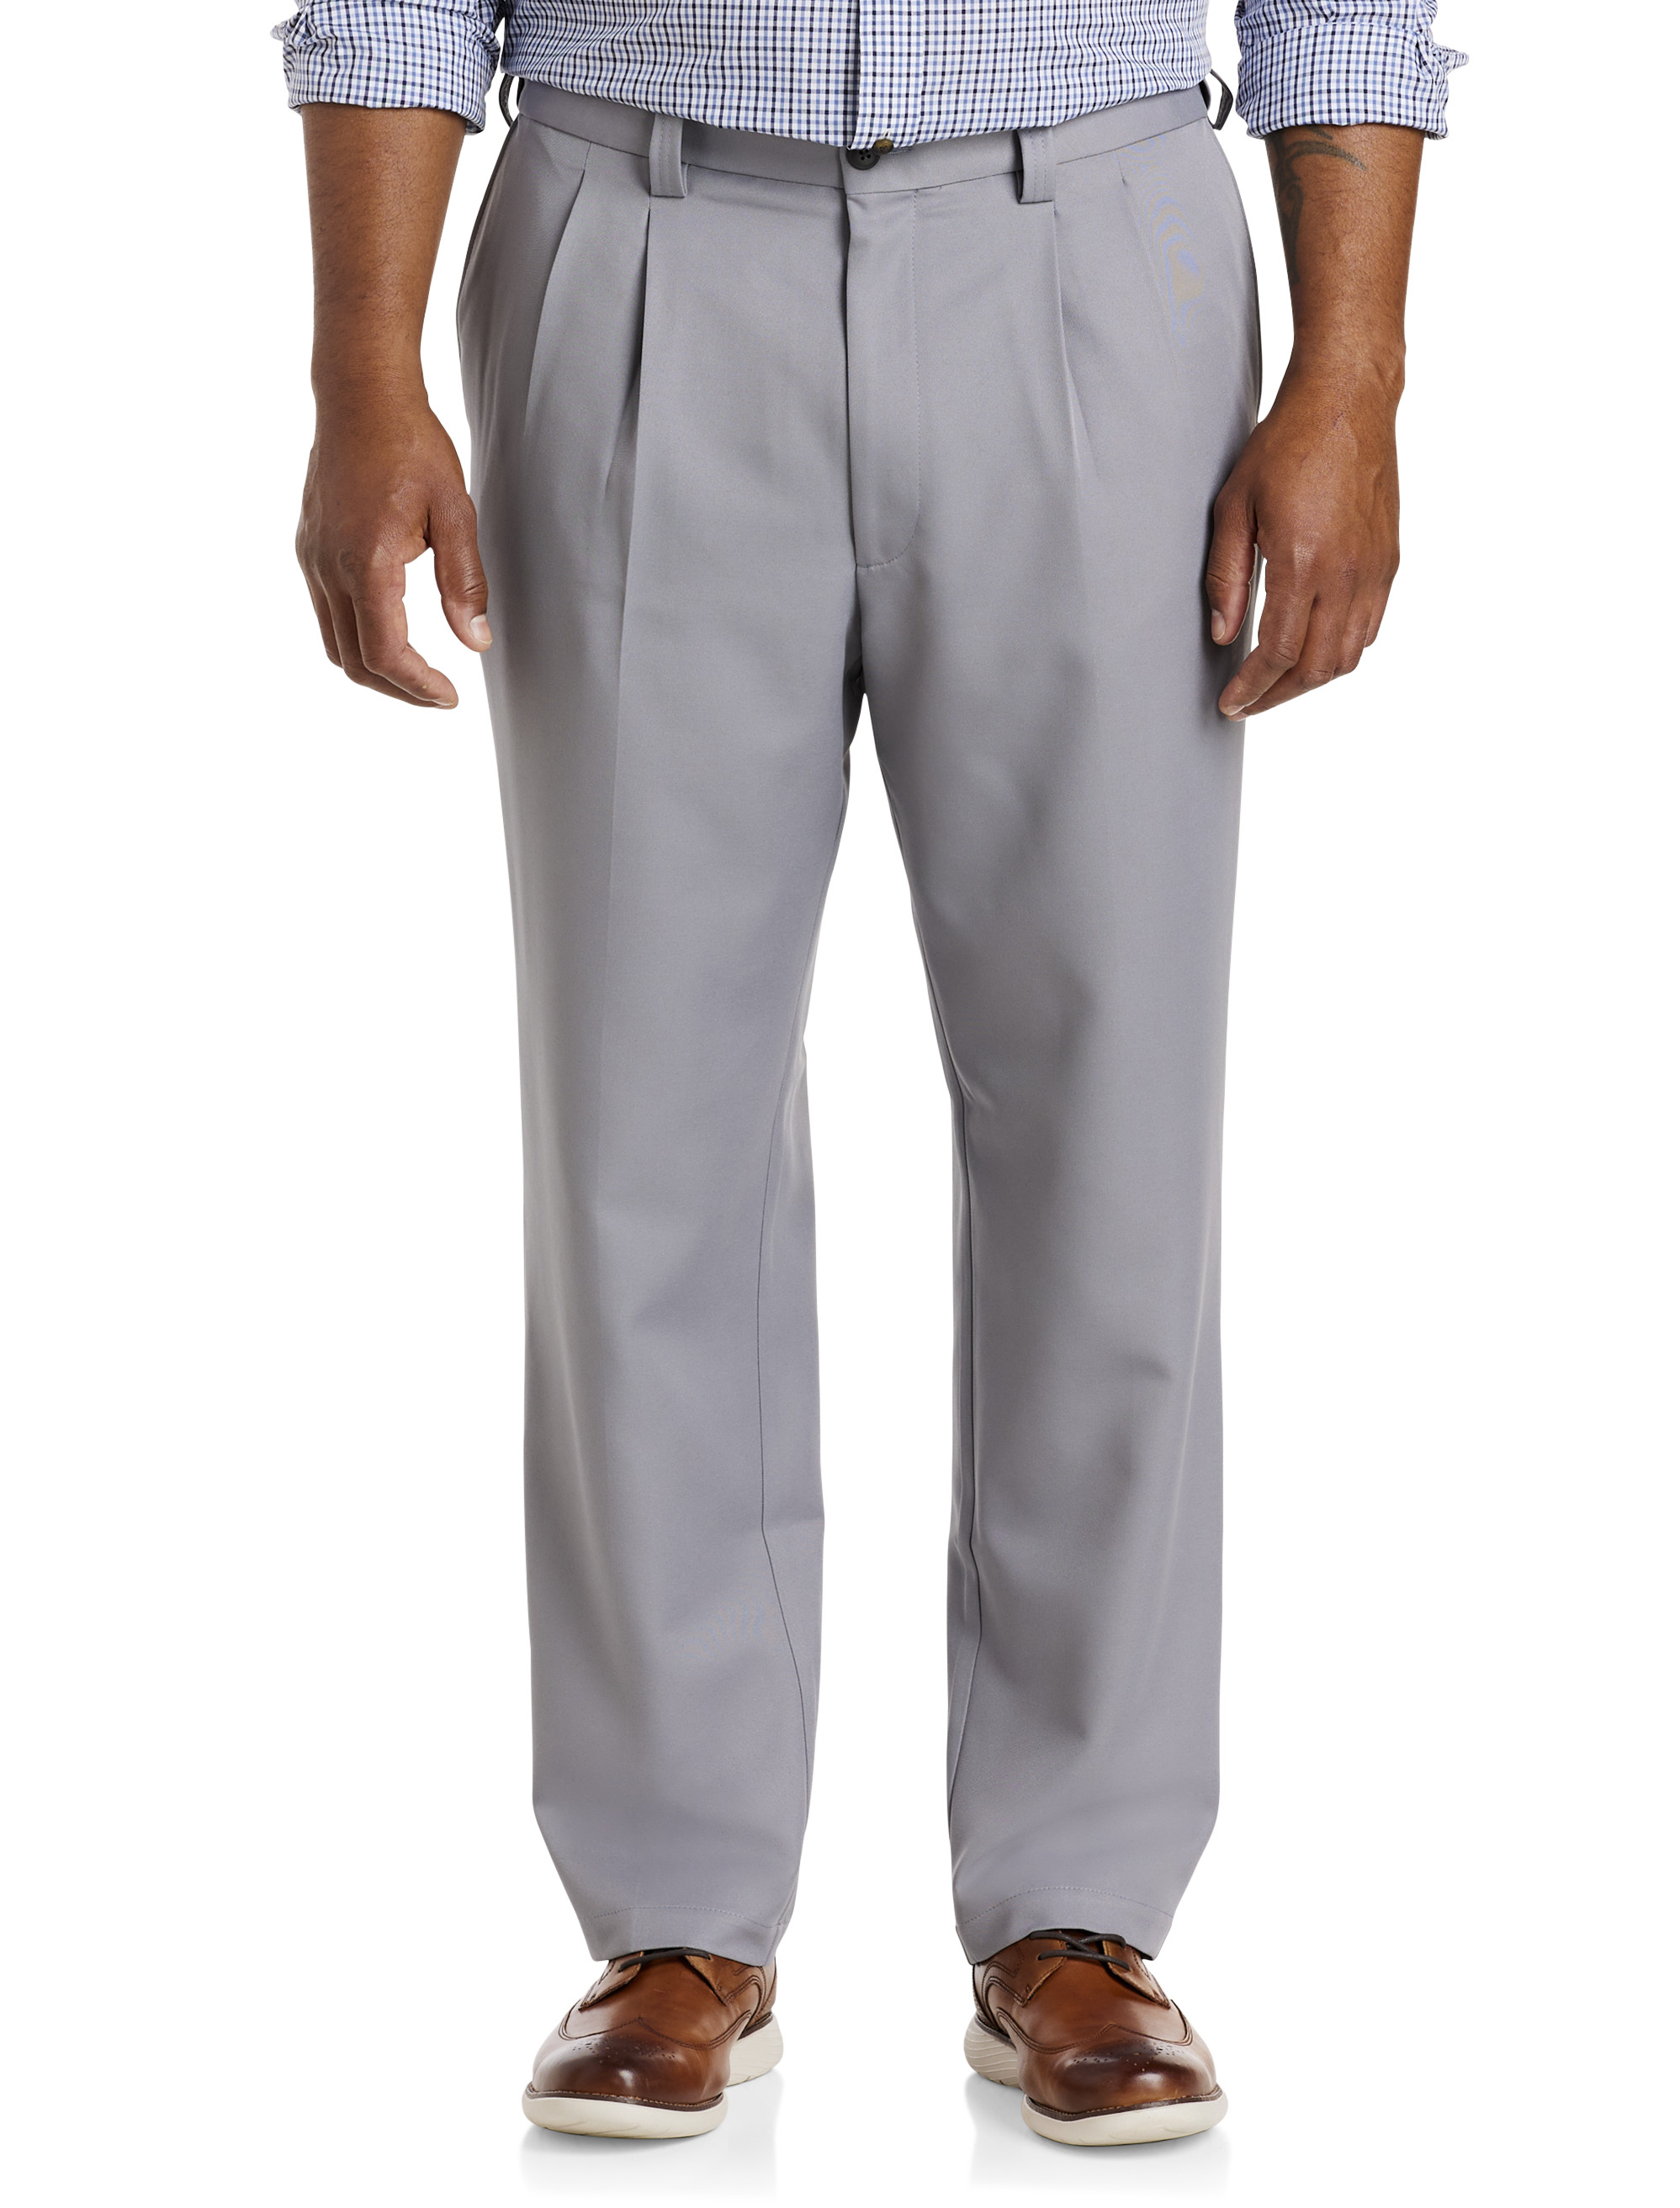 Nautica Mens Stretch Soft Twill Classic Fit Pants, Grey, 38 x 34